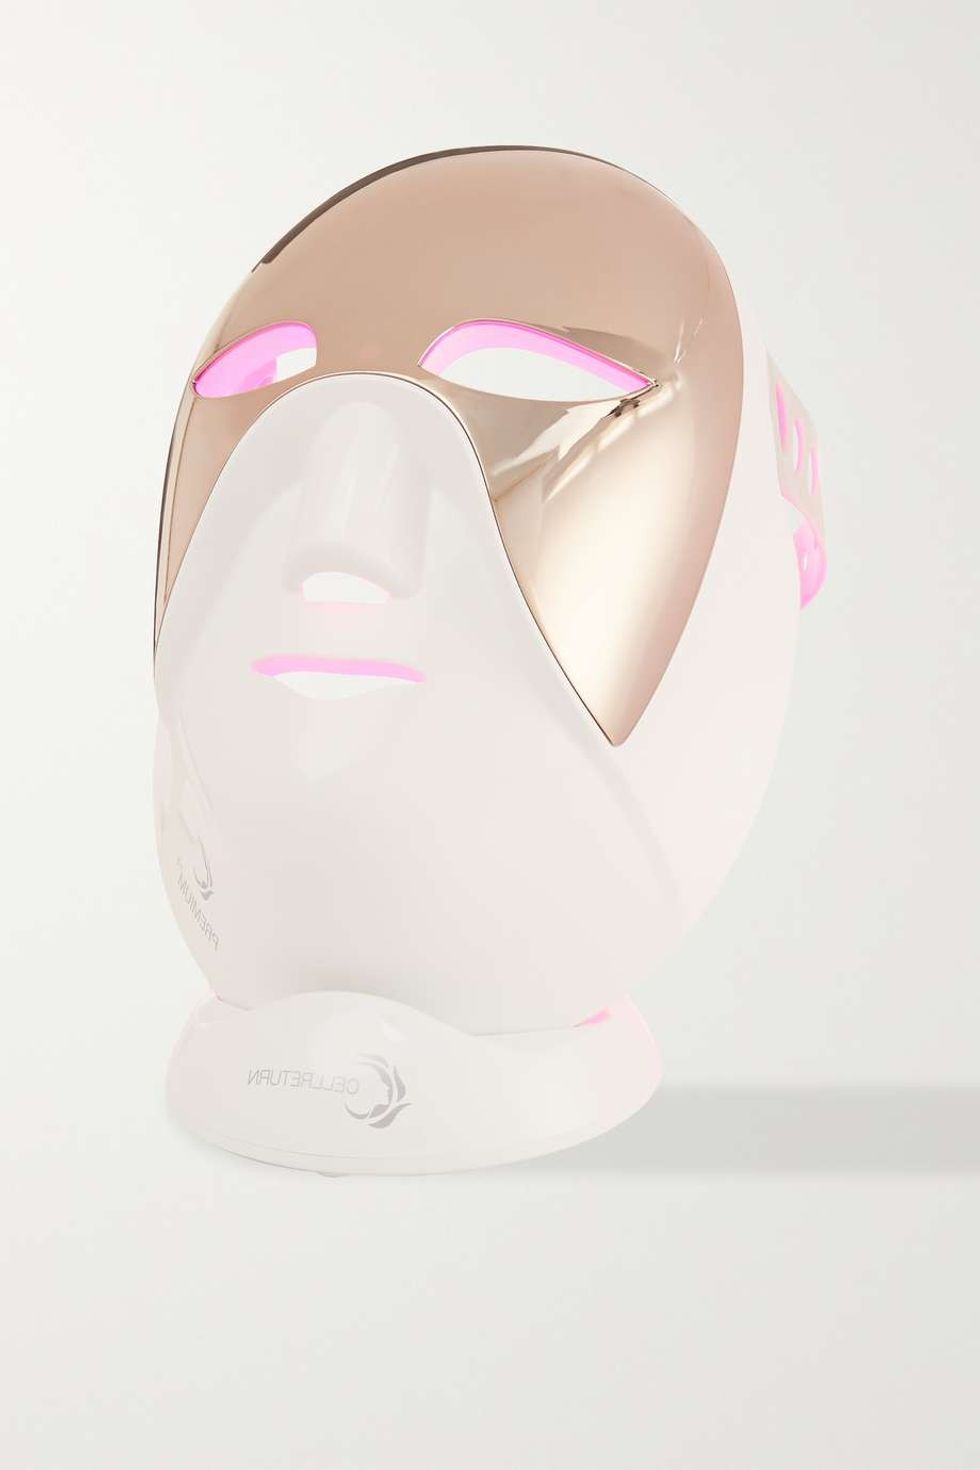 Angela Caglia Cellreturn Premium LED Mask